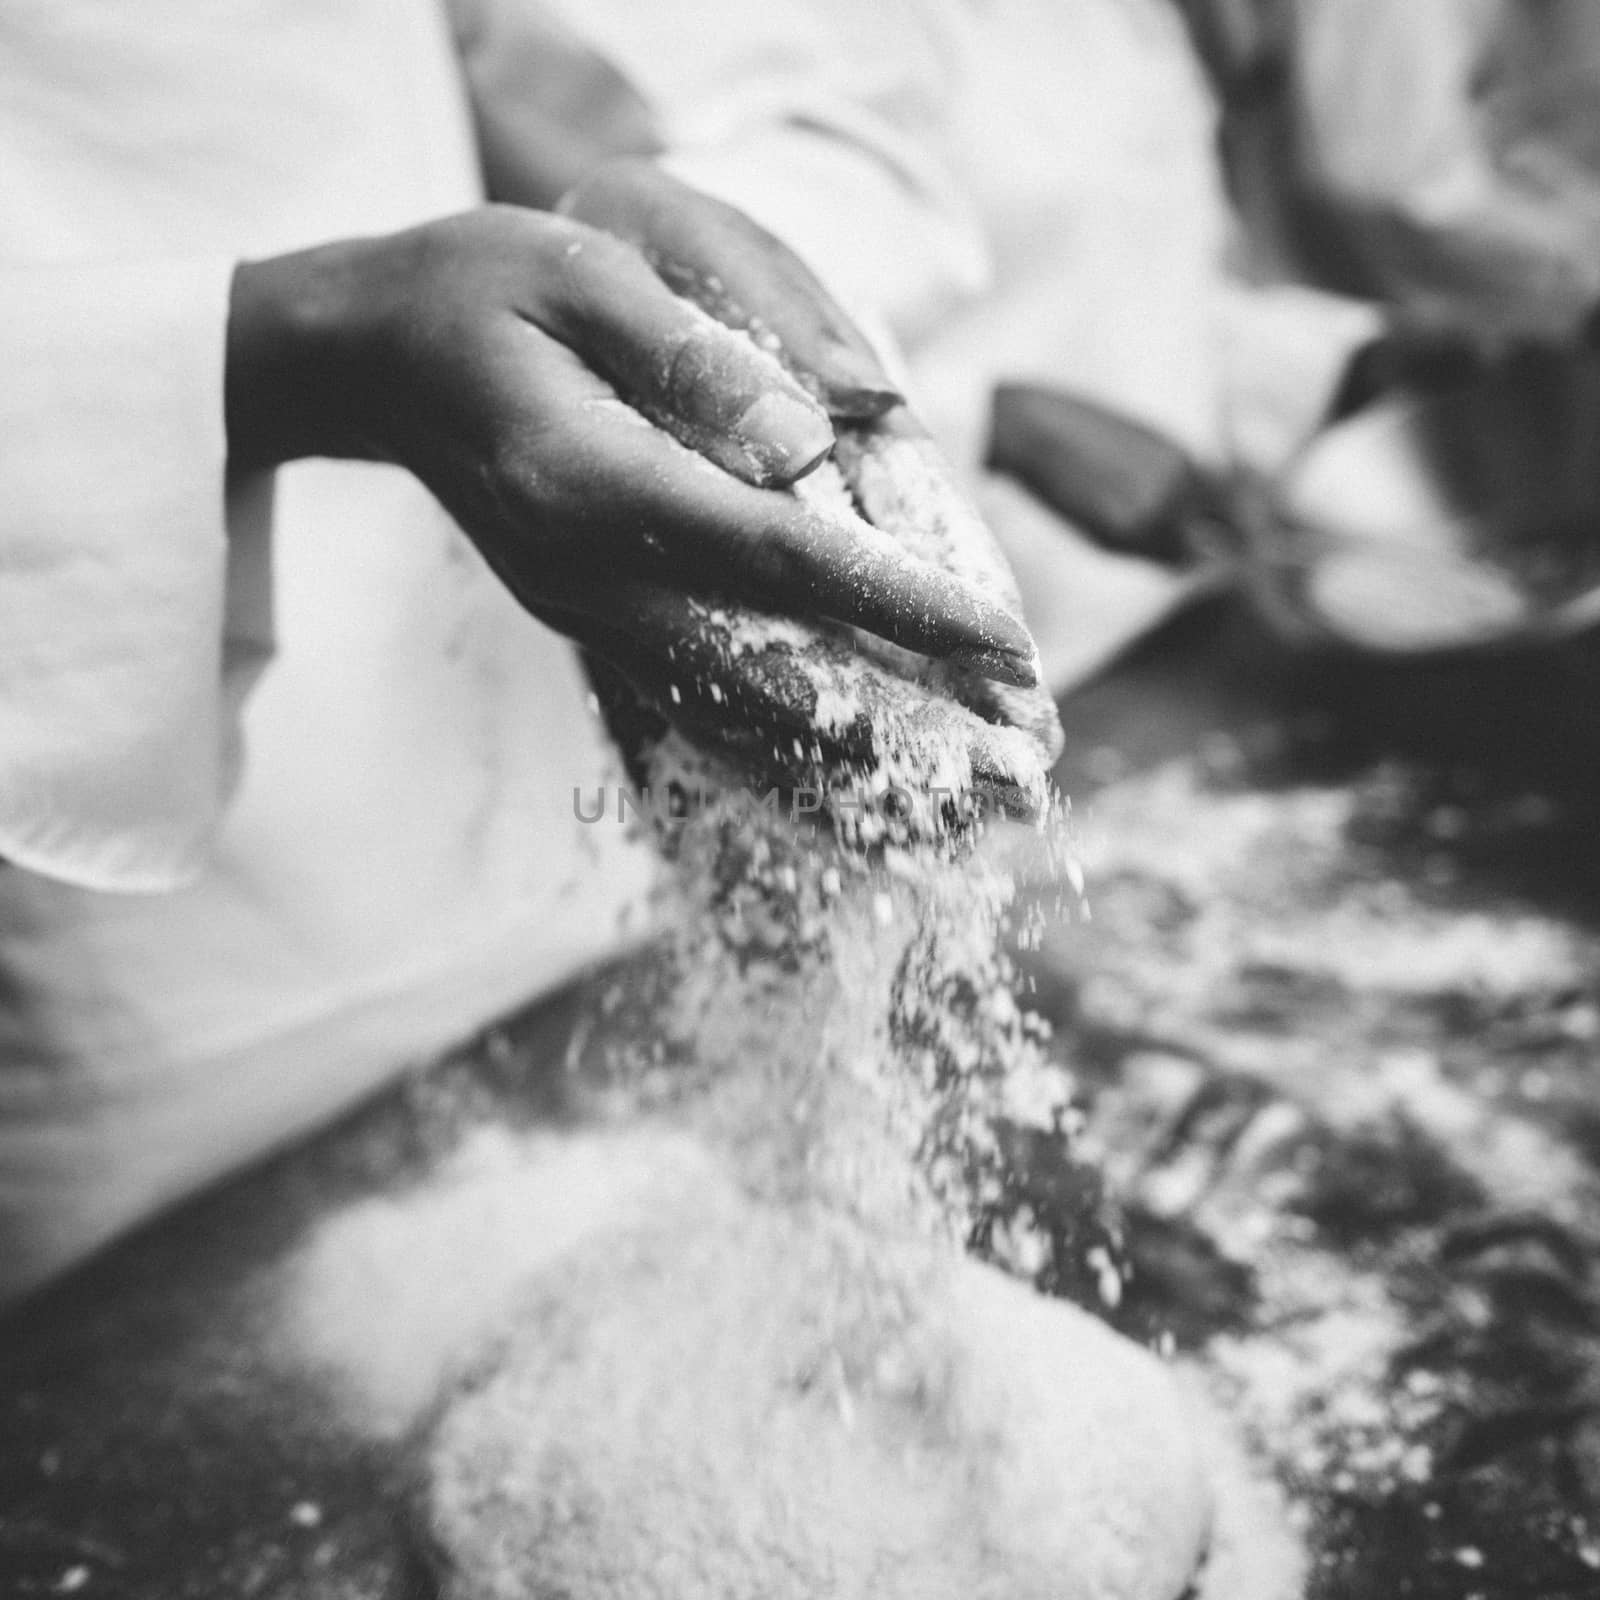 Chef preparing dough at counter by Wavebreakmedia